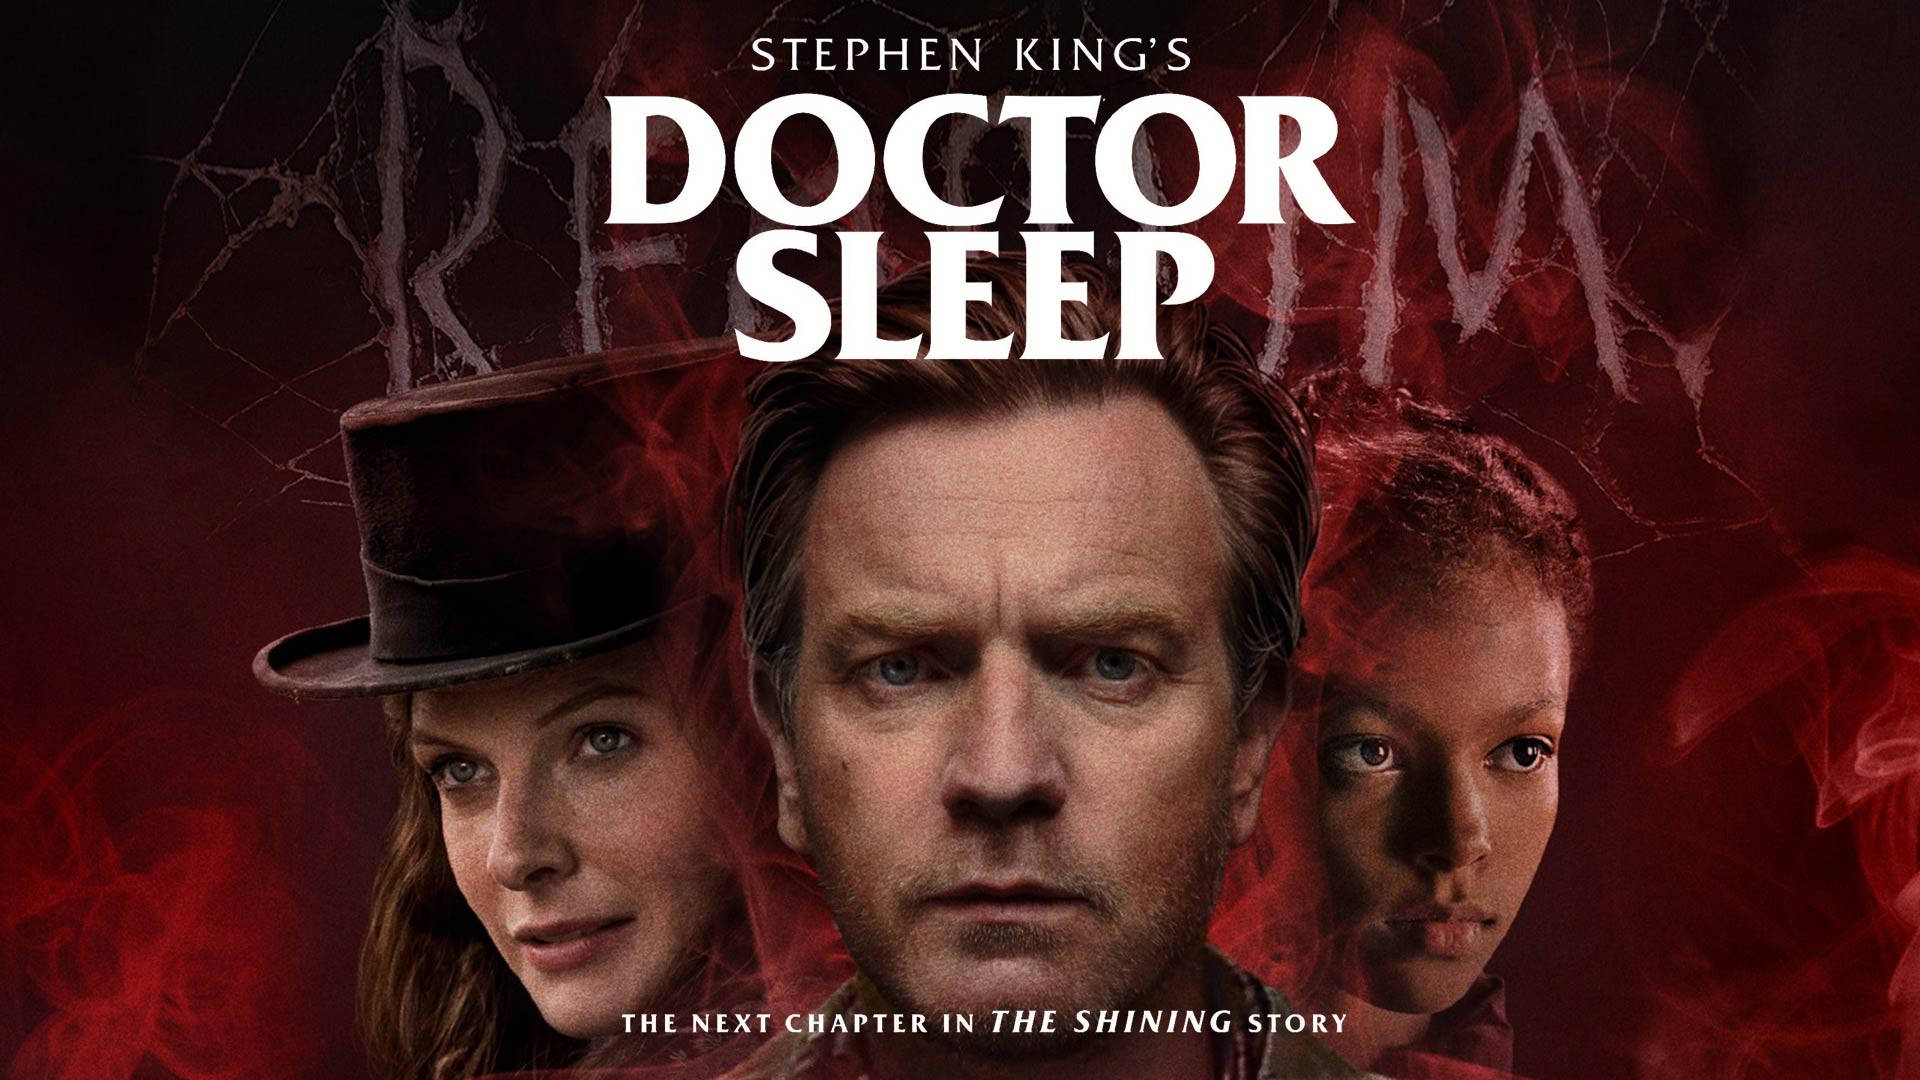 The Shining Doctor Sleep Sequel Wallpaper